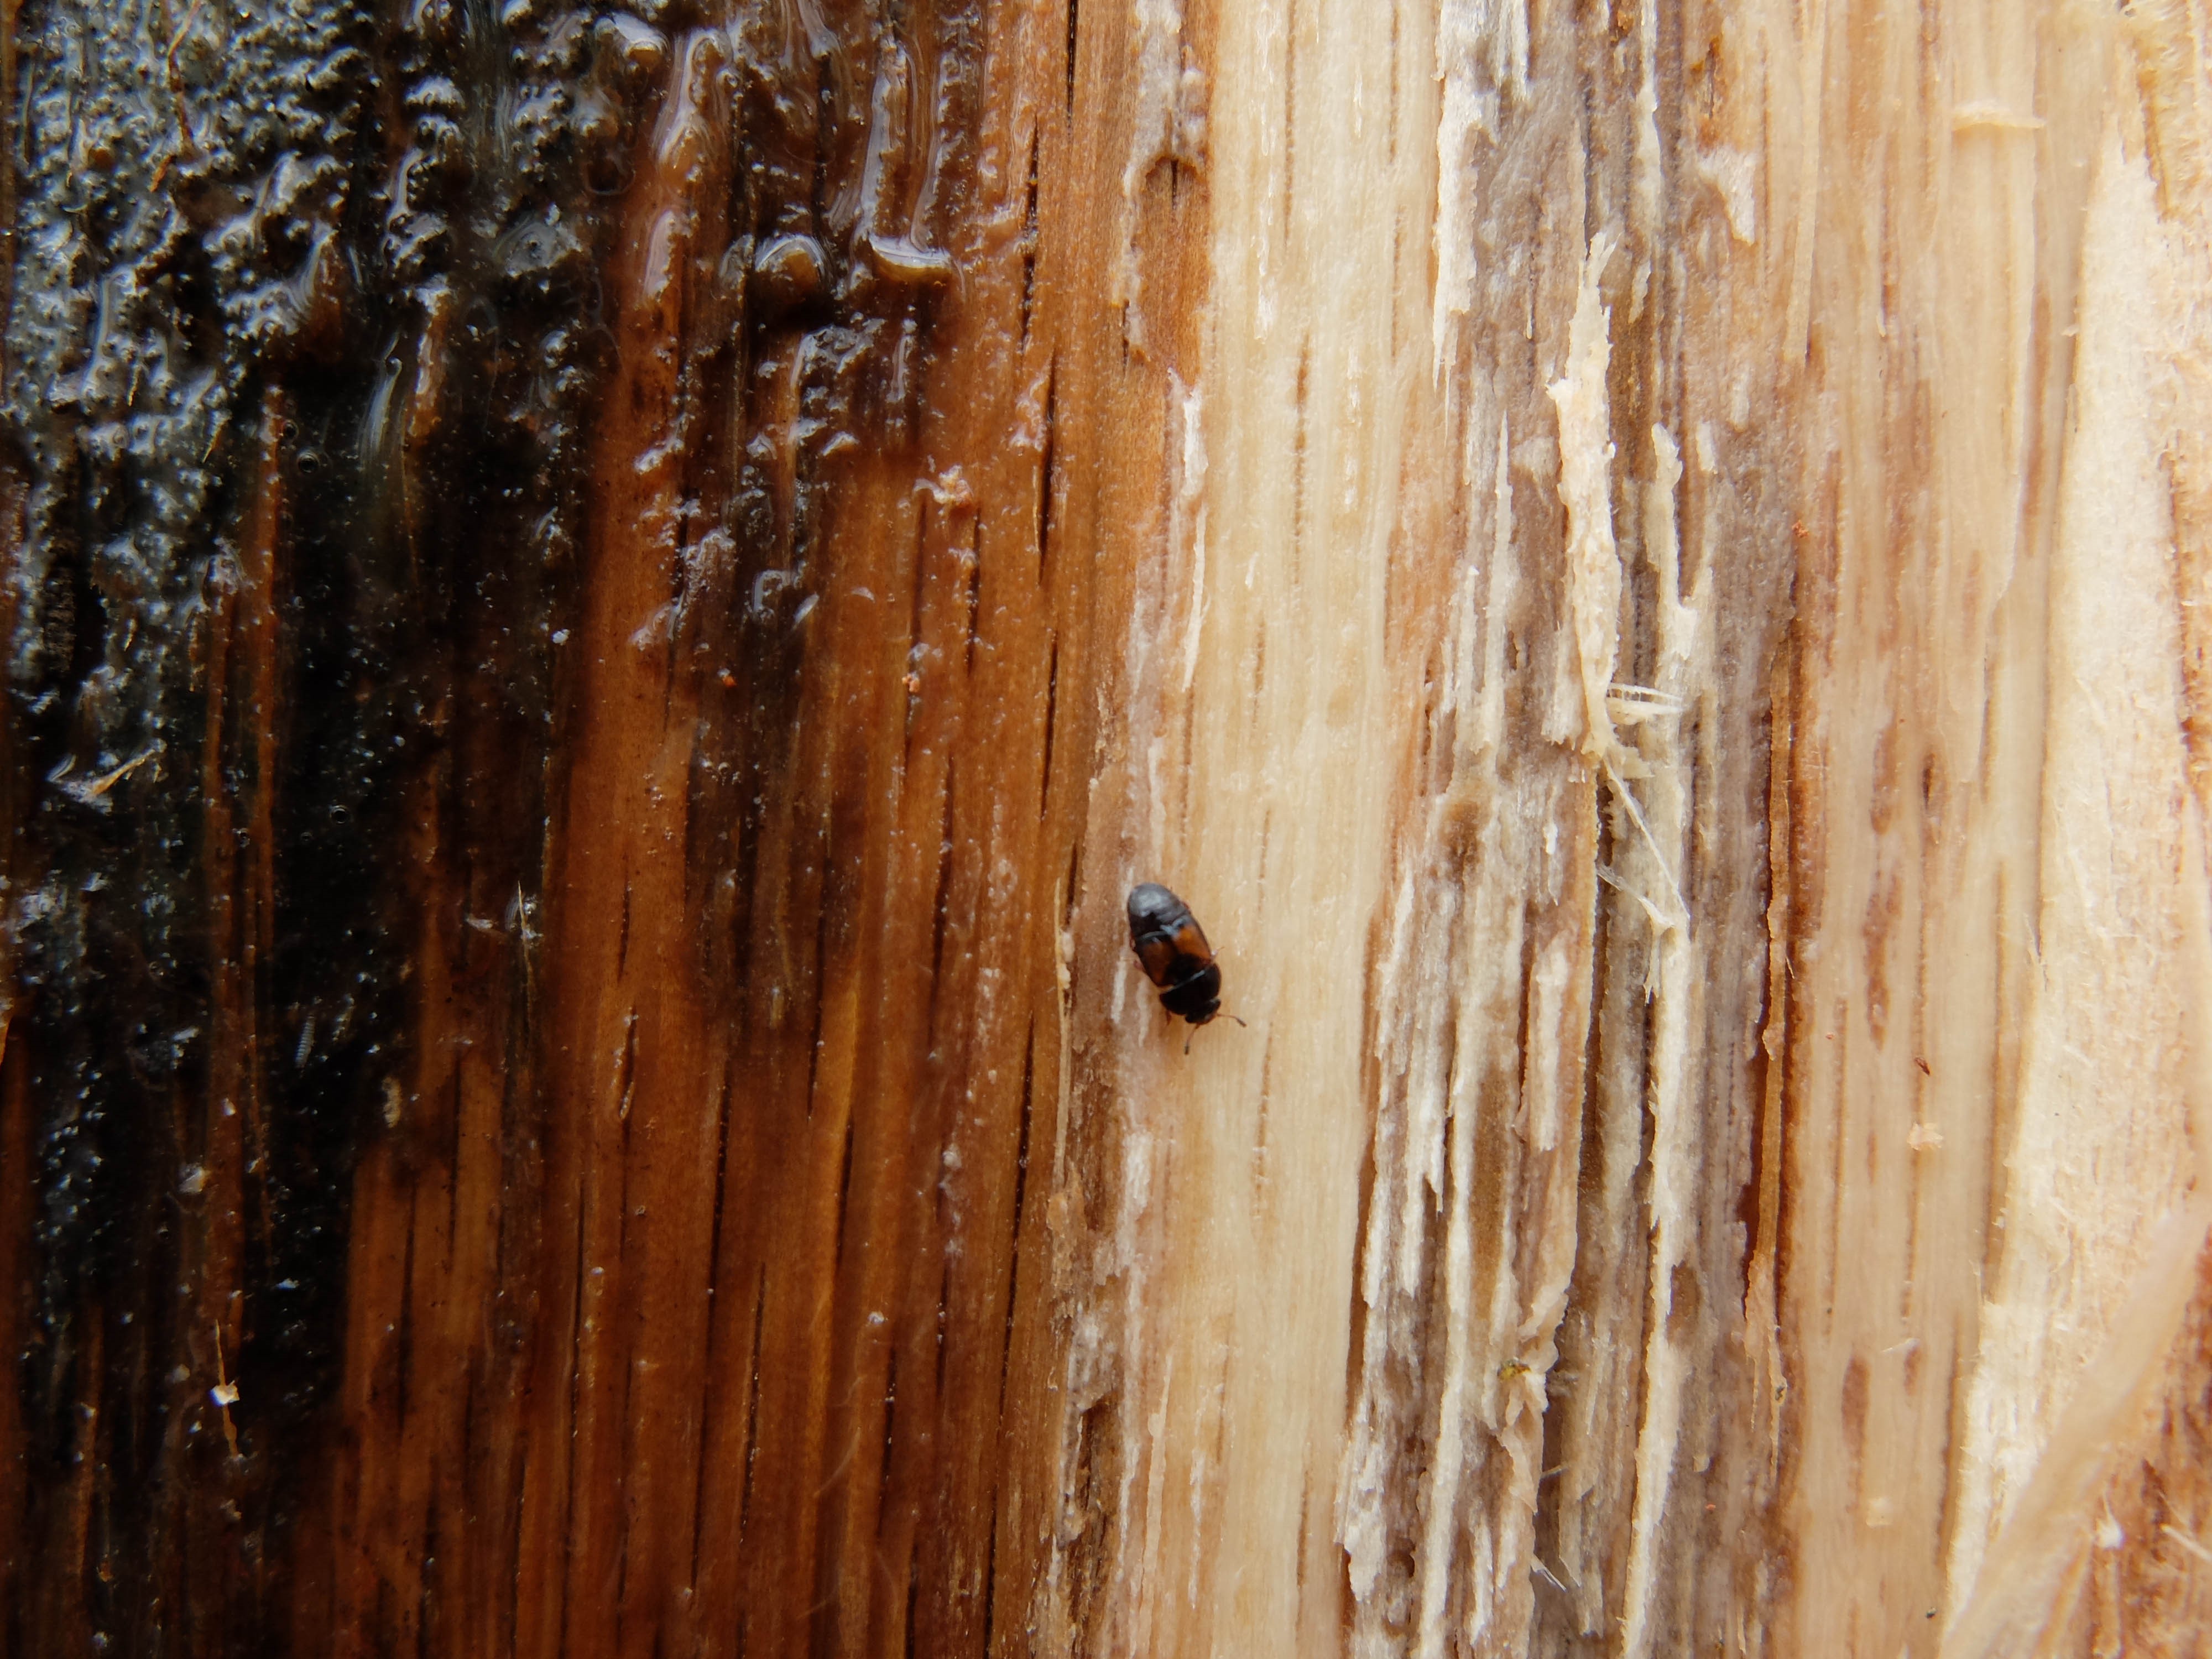 A tiny beetle on an oak tree.